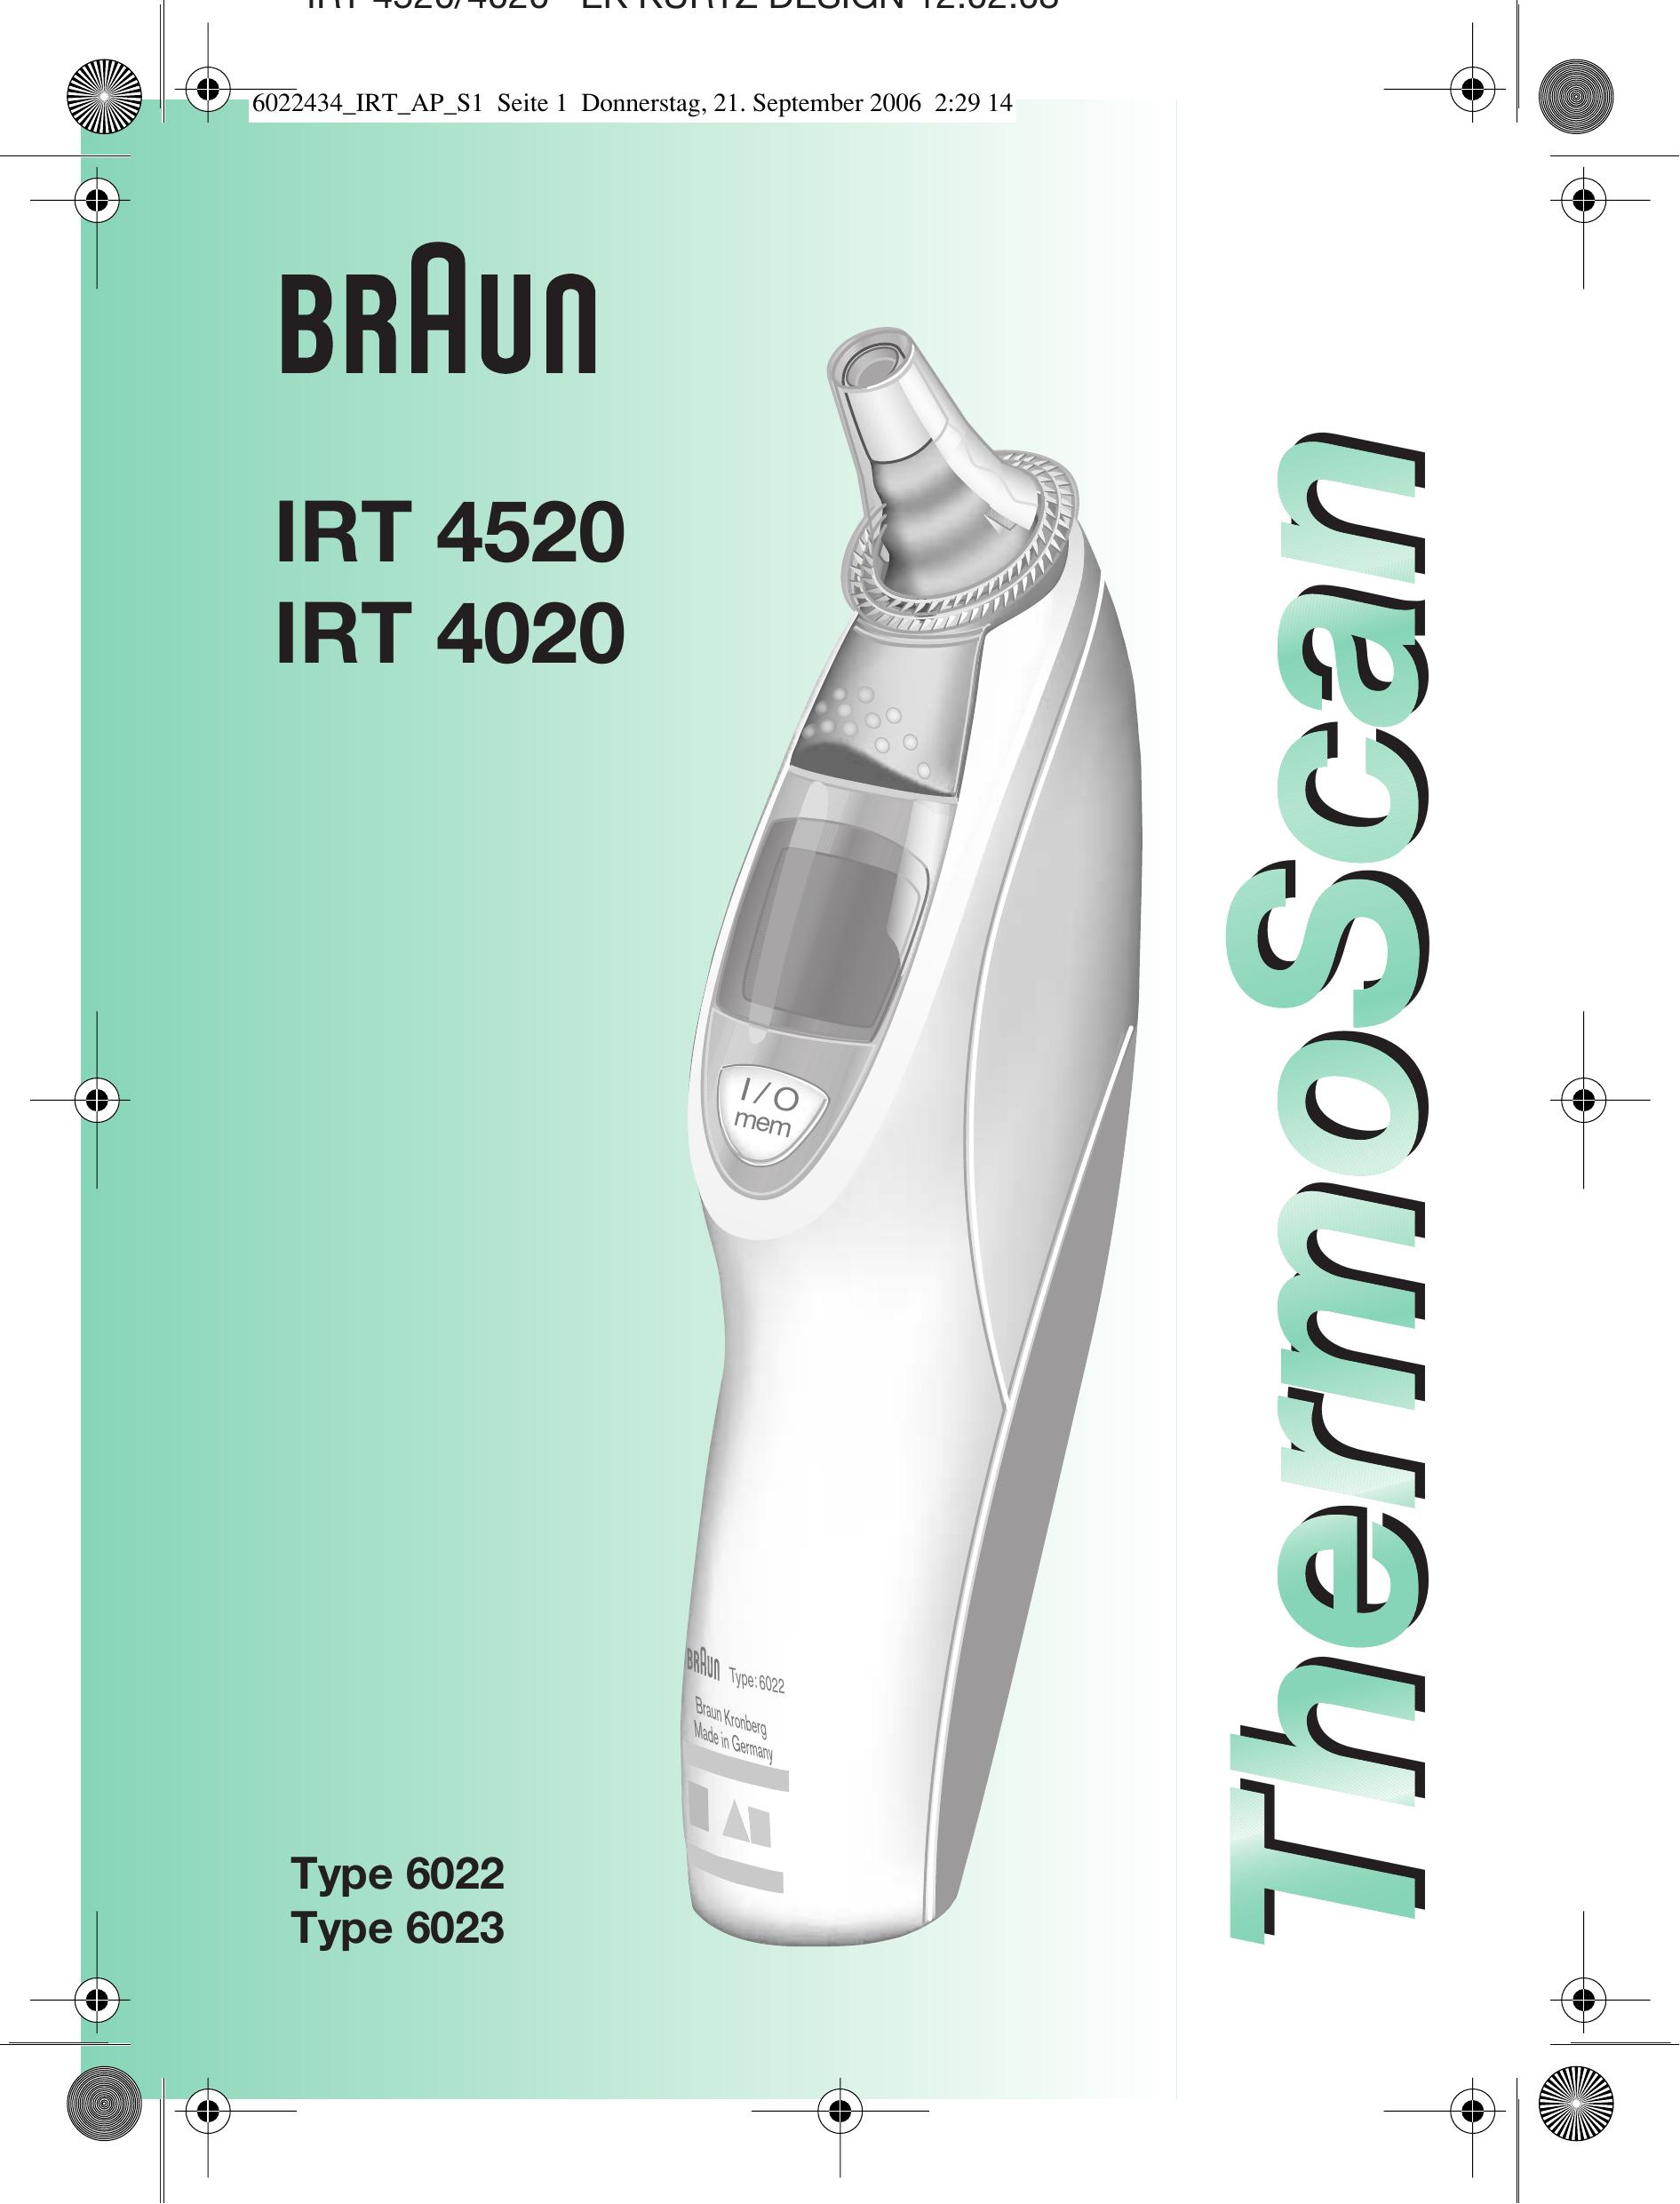 Braun IRT4520 Thermometer User Manual